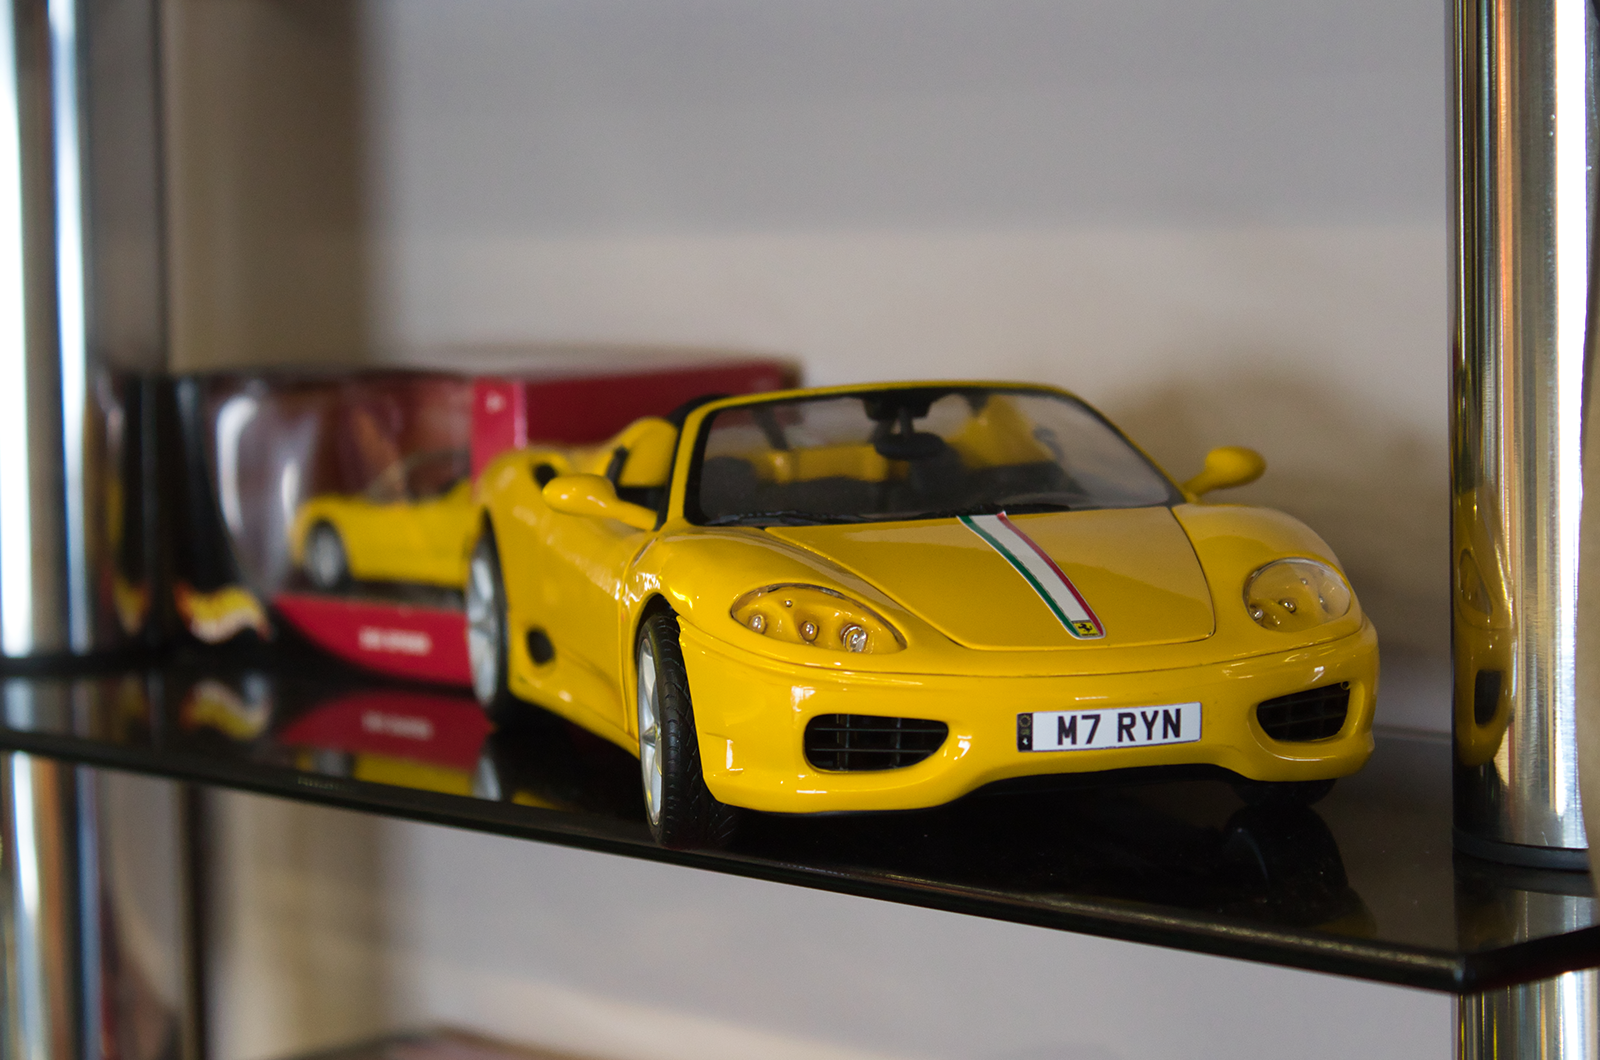 Classic & Sports Car – Also in my garage: a classic Ferrari and automobilia